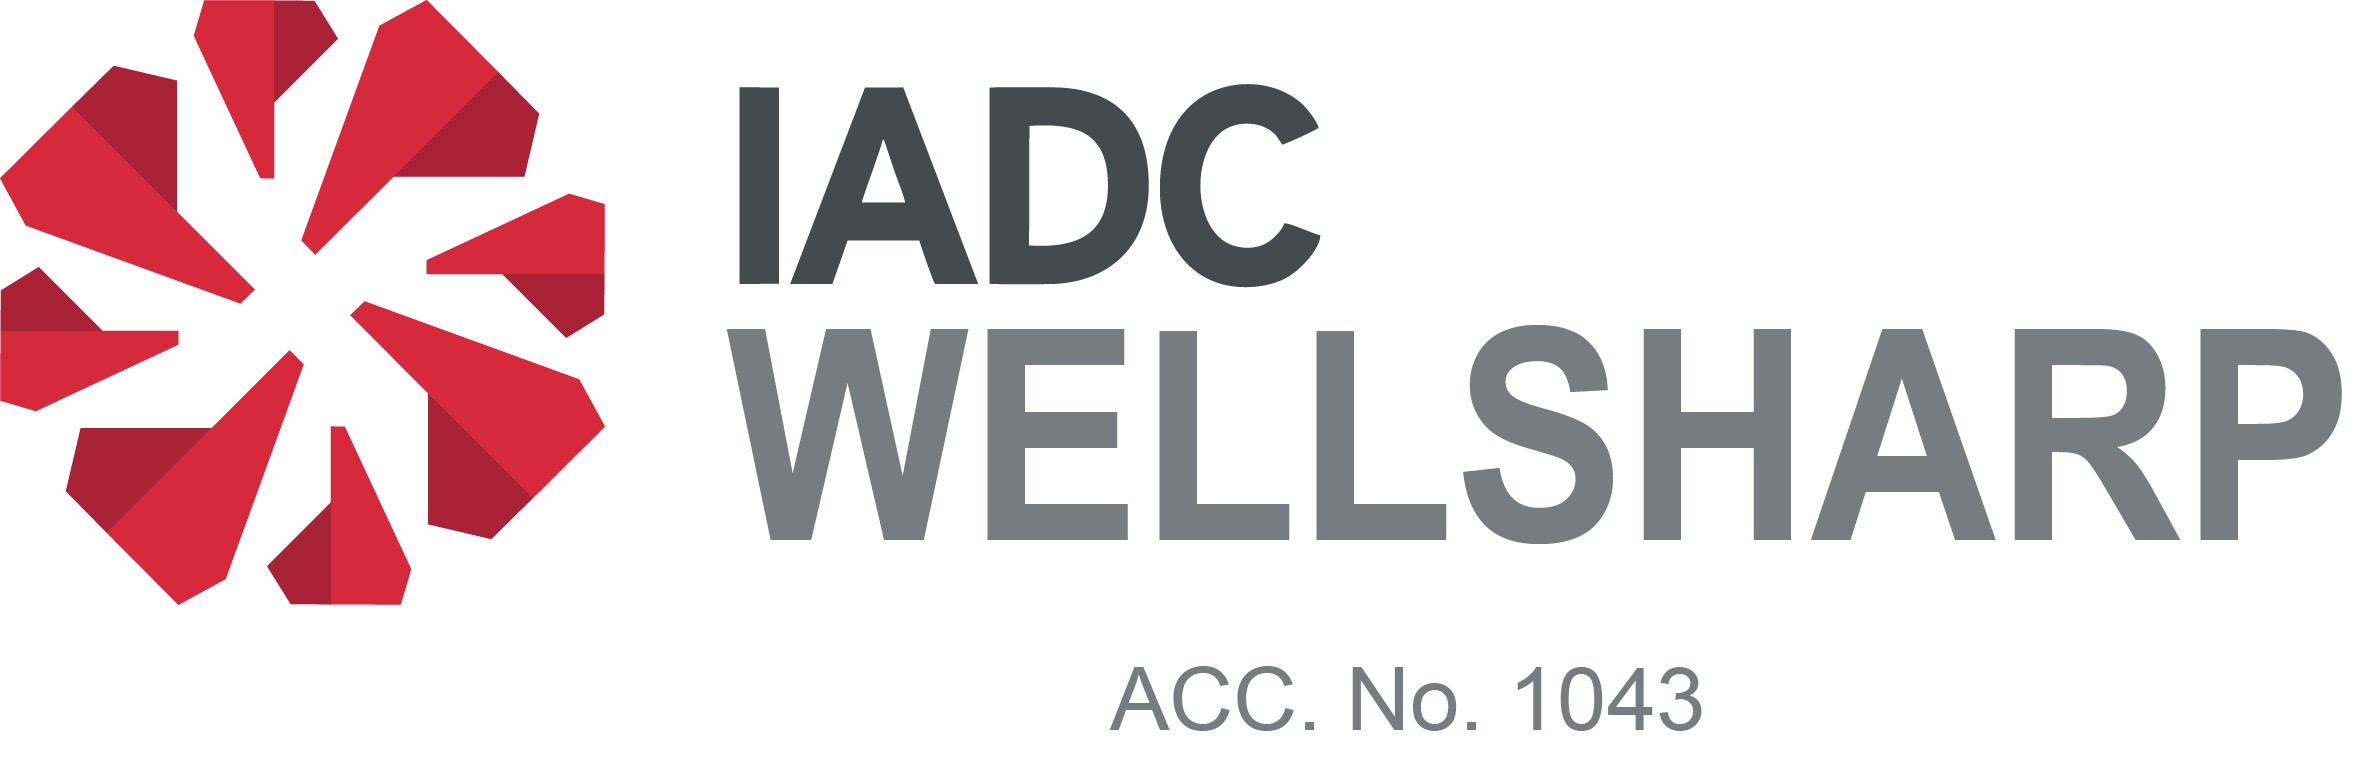 IADC-Wellsharp.png